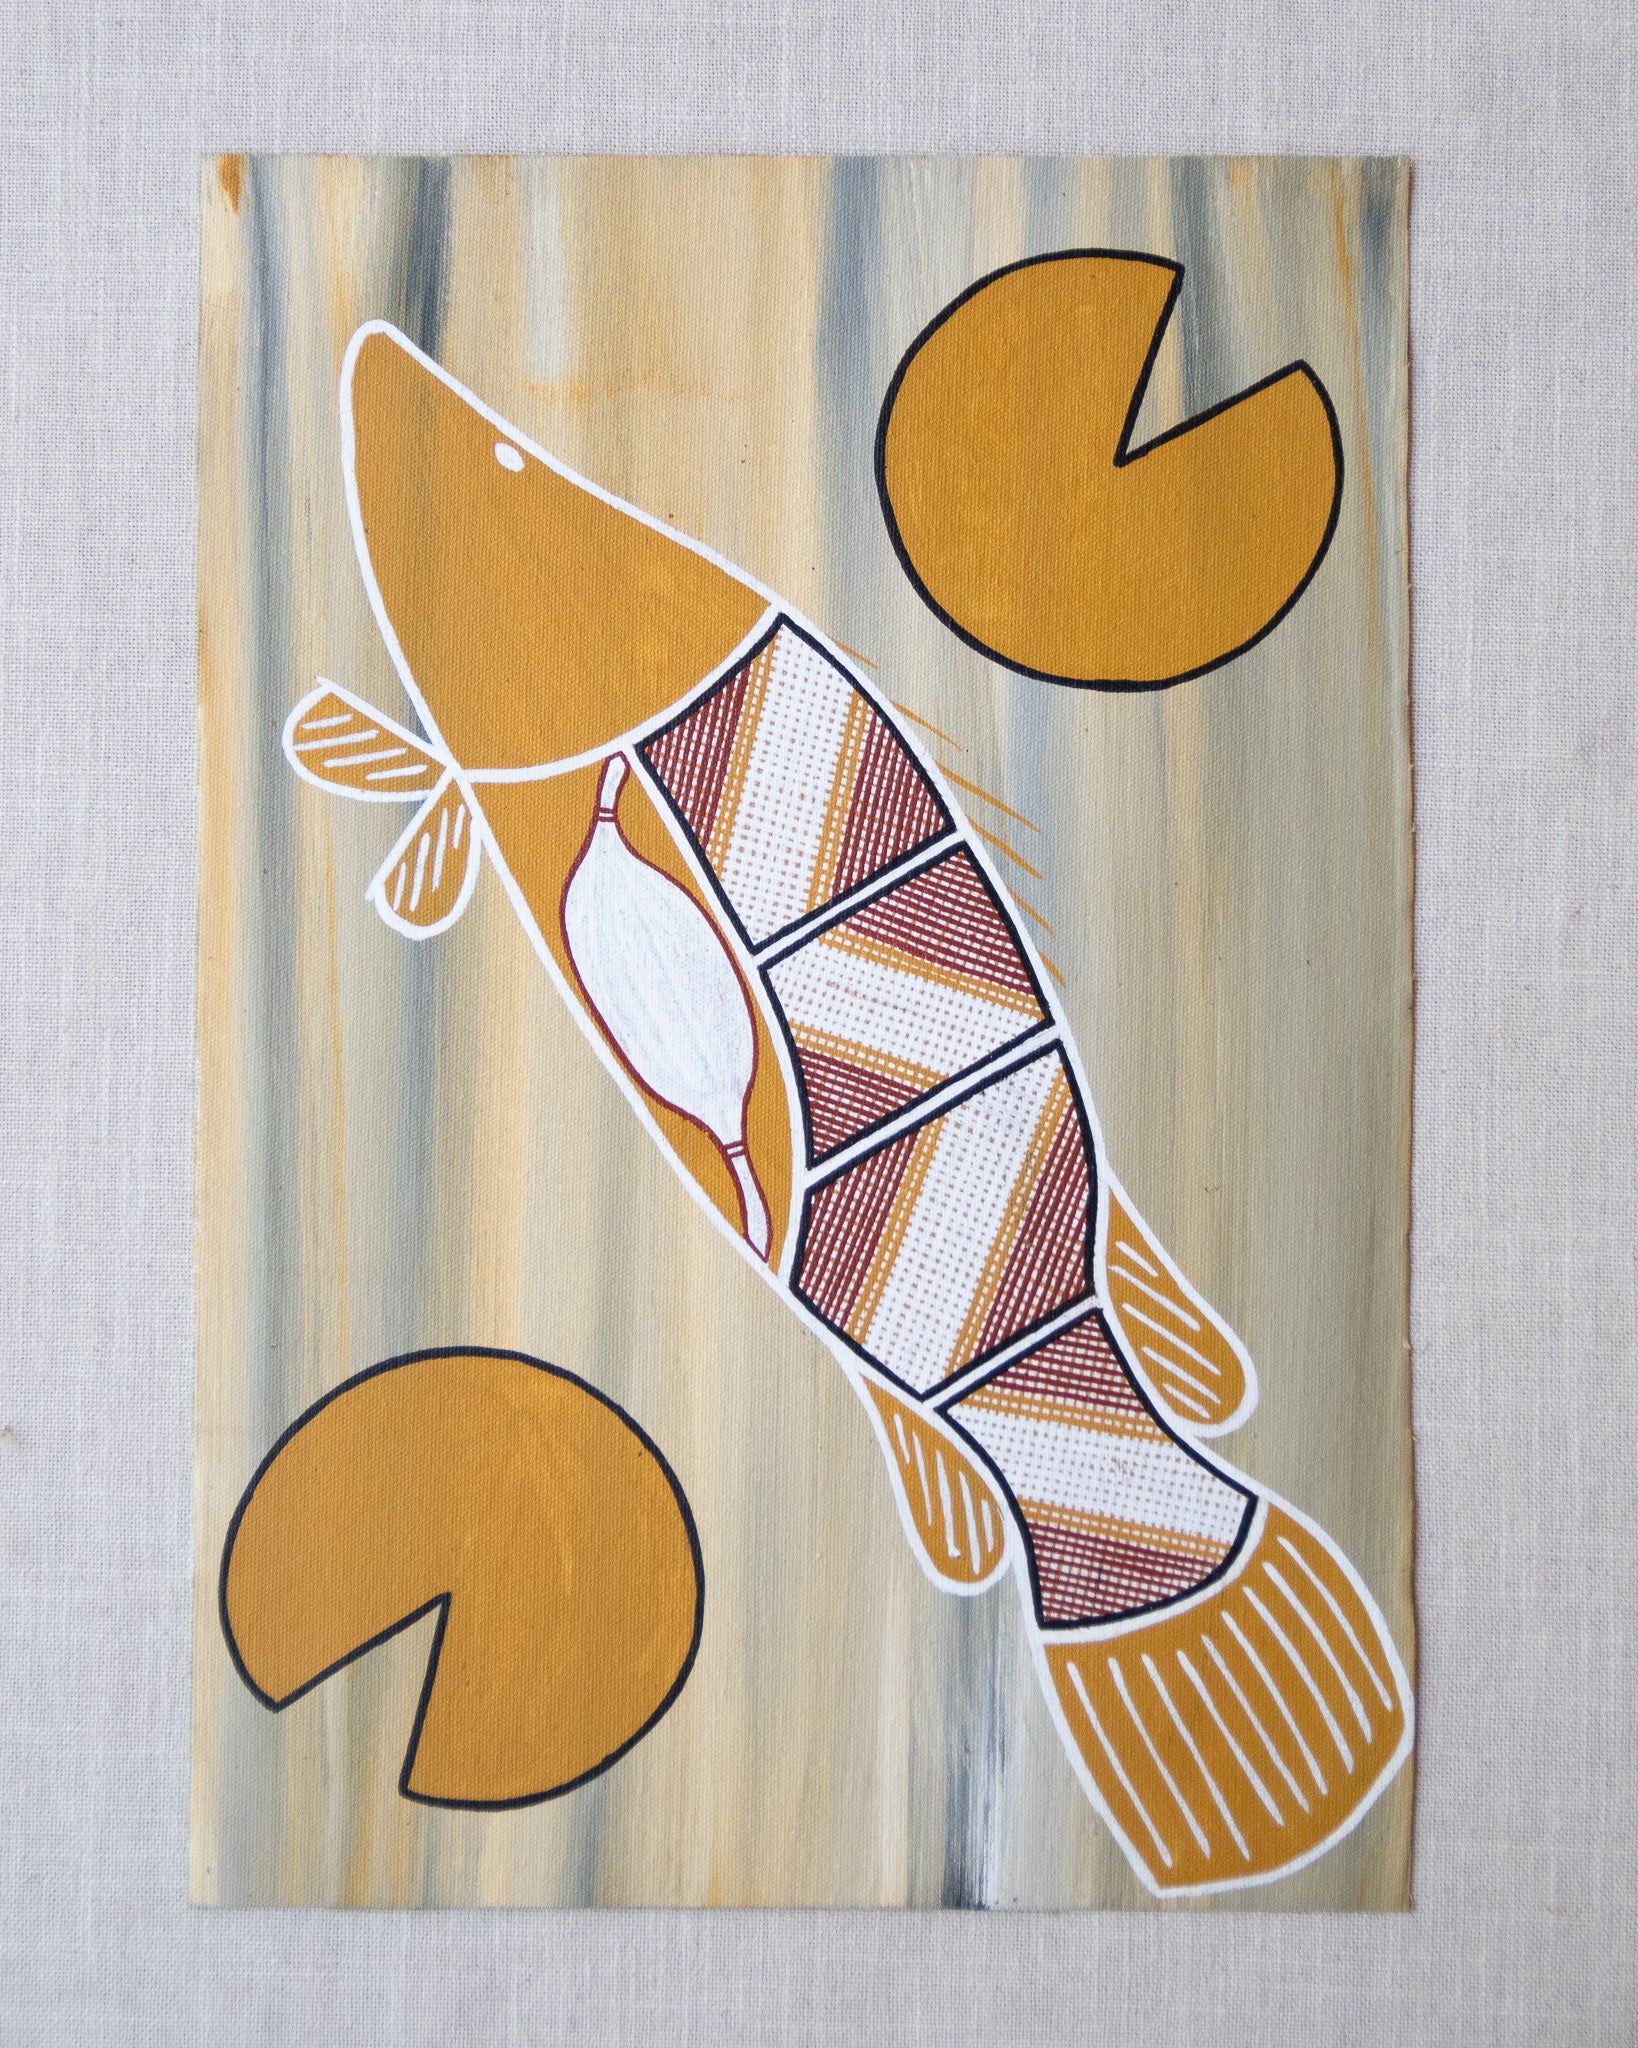 Authentic aboriginal painting with barramundi fish